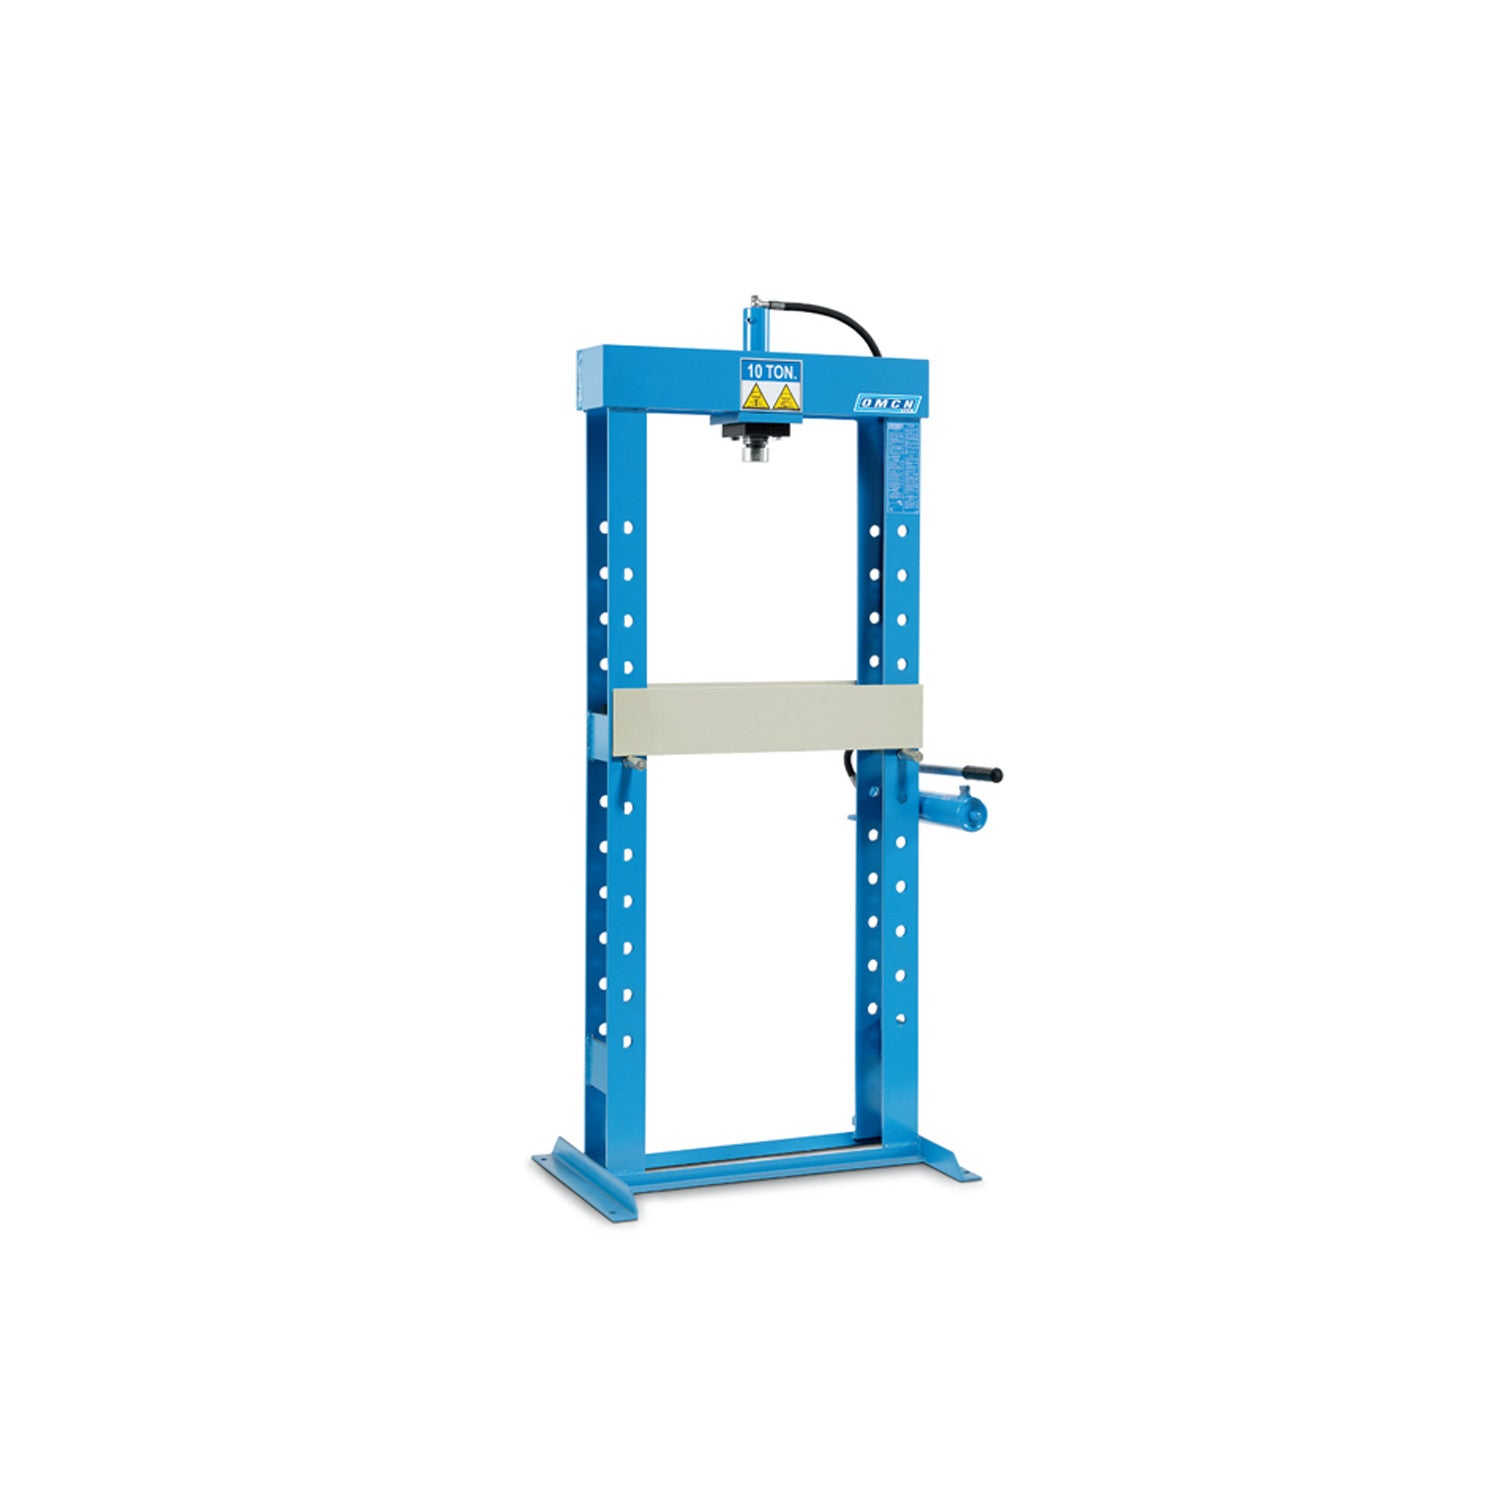 Hydraulic press with 1-speed hand pump capacity 10 ton - OMCN 154/E